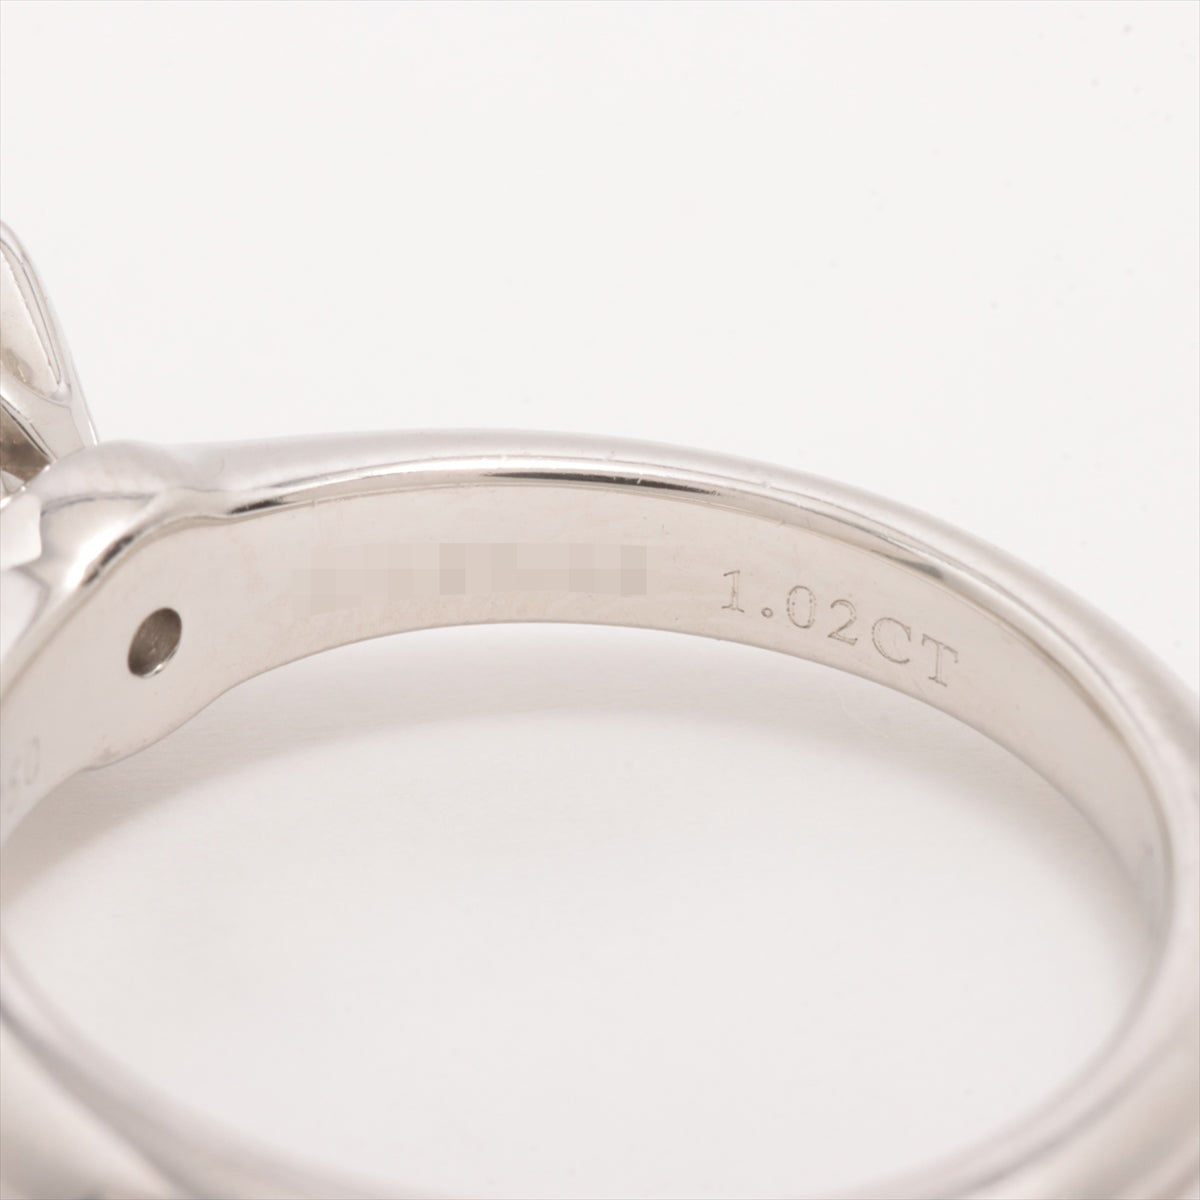 Tiffany Solitaire Diamond Ring Pt950 5.6g 1.02 I VVS1 3EX NONE